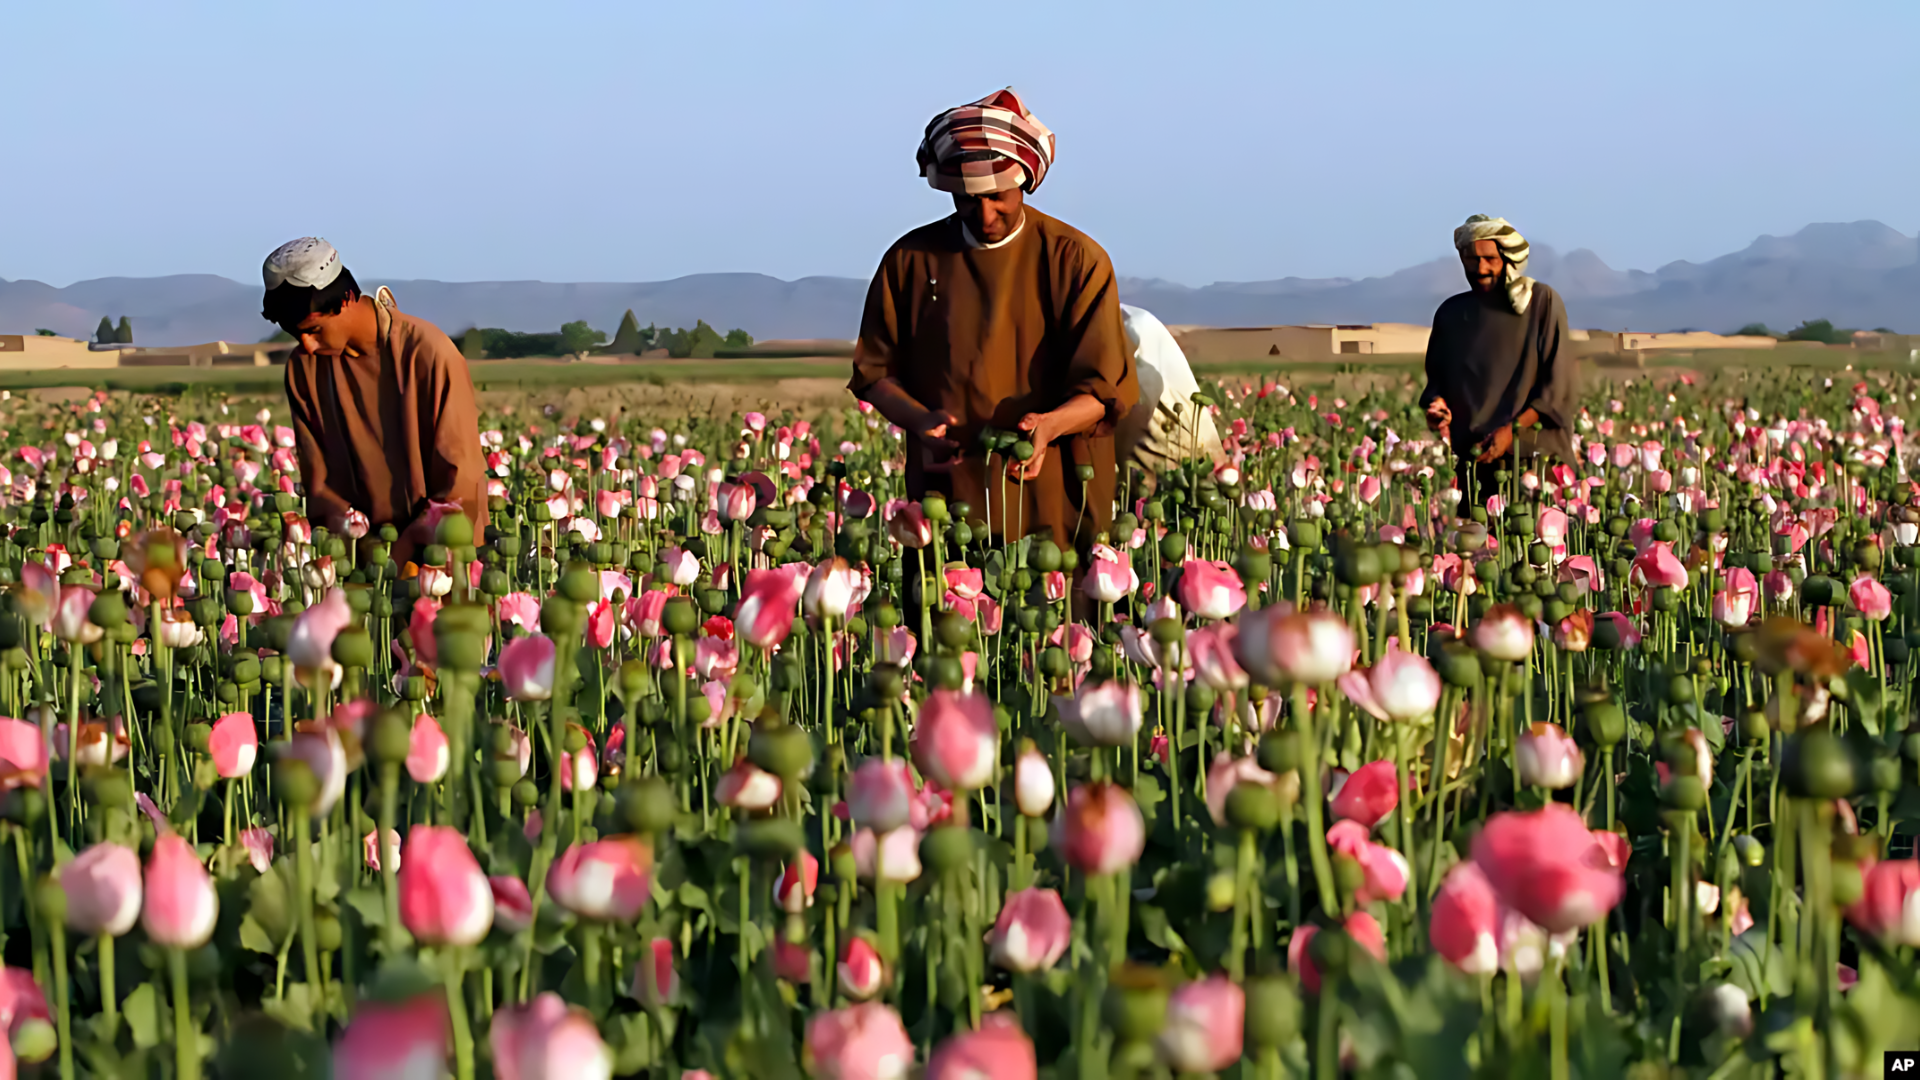 UN Report Reveals Massive Afghan Opium Stockpiles Sustaining Narcotics Trade Despite Taliban Ban